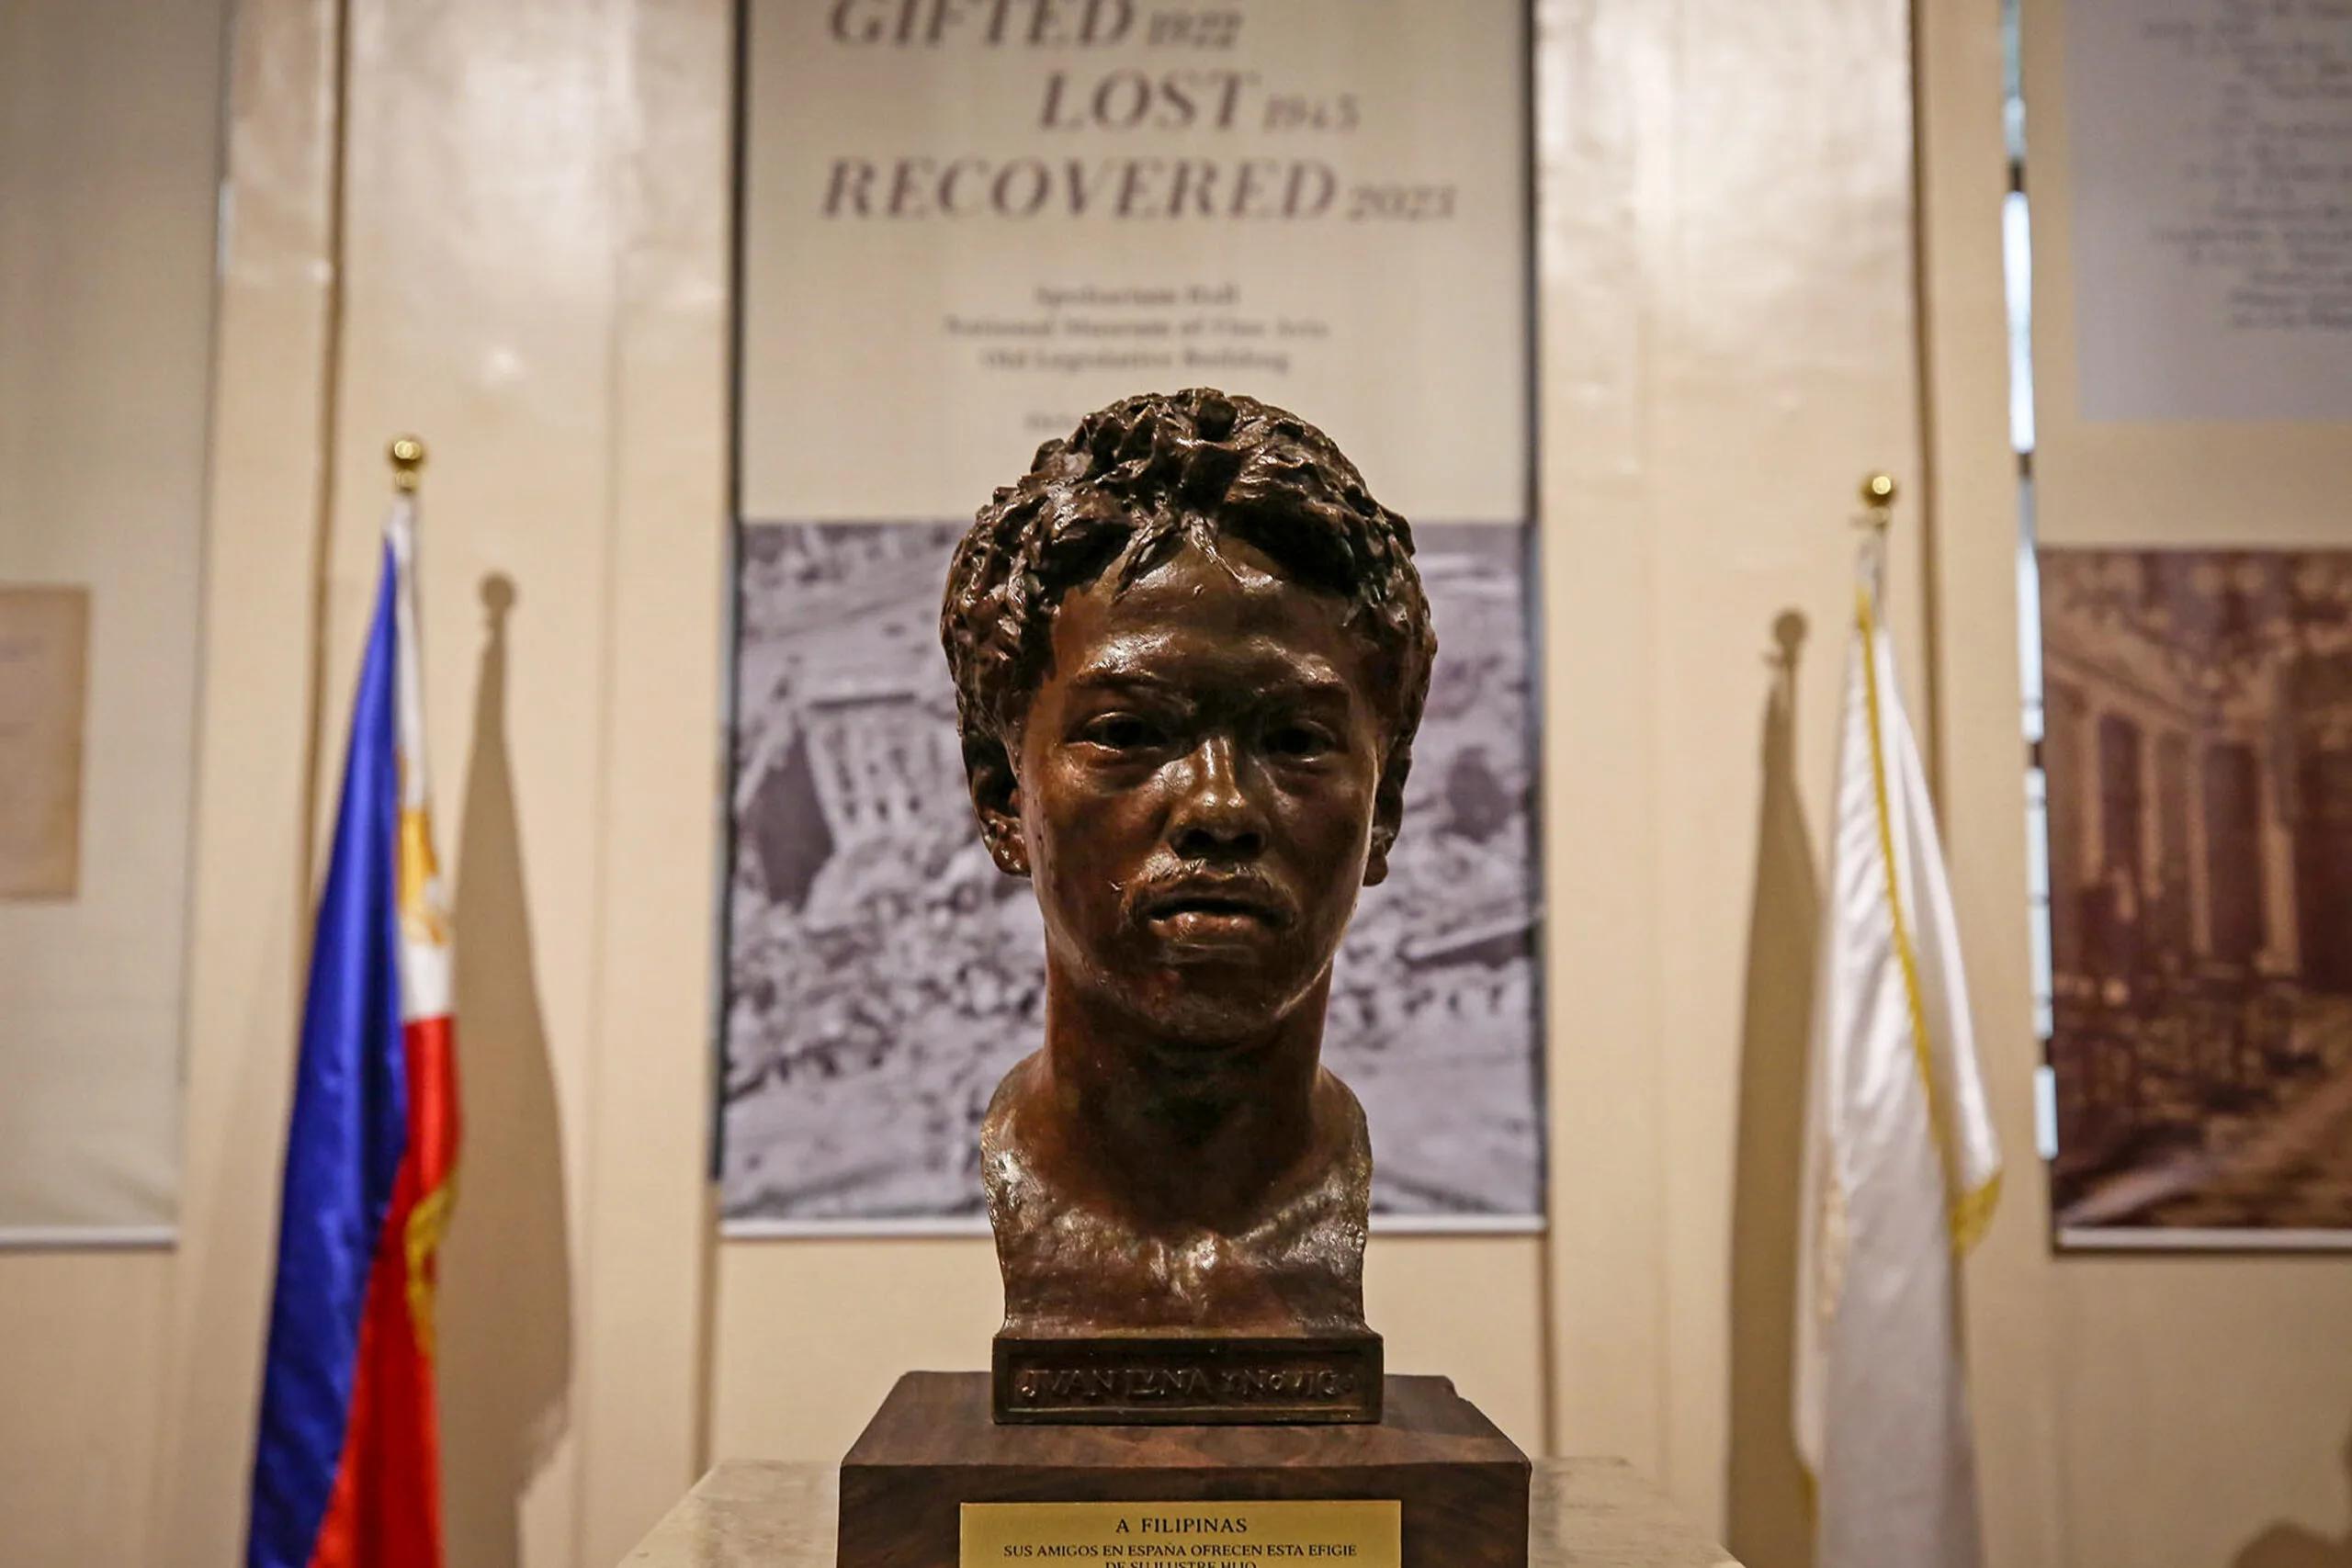 Juan Luna bronze bust returned home after more than 7 decades